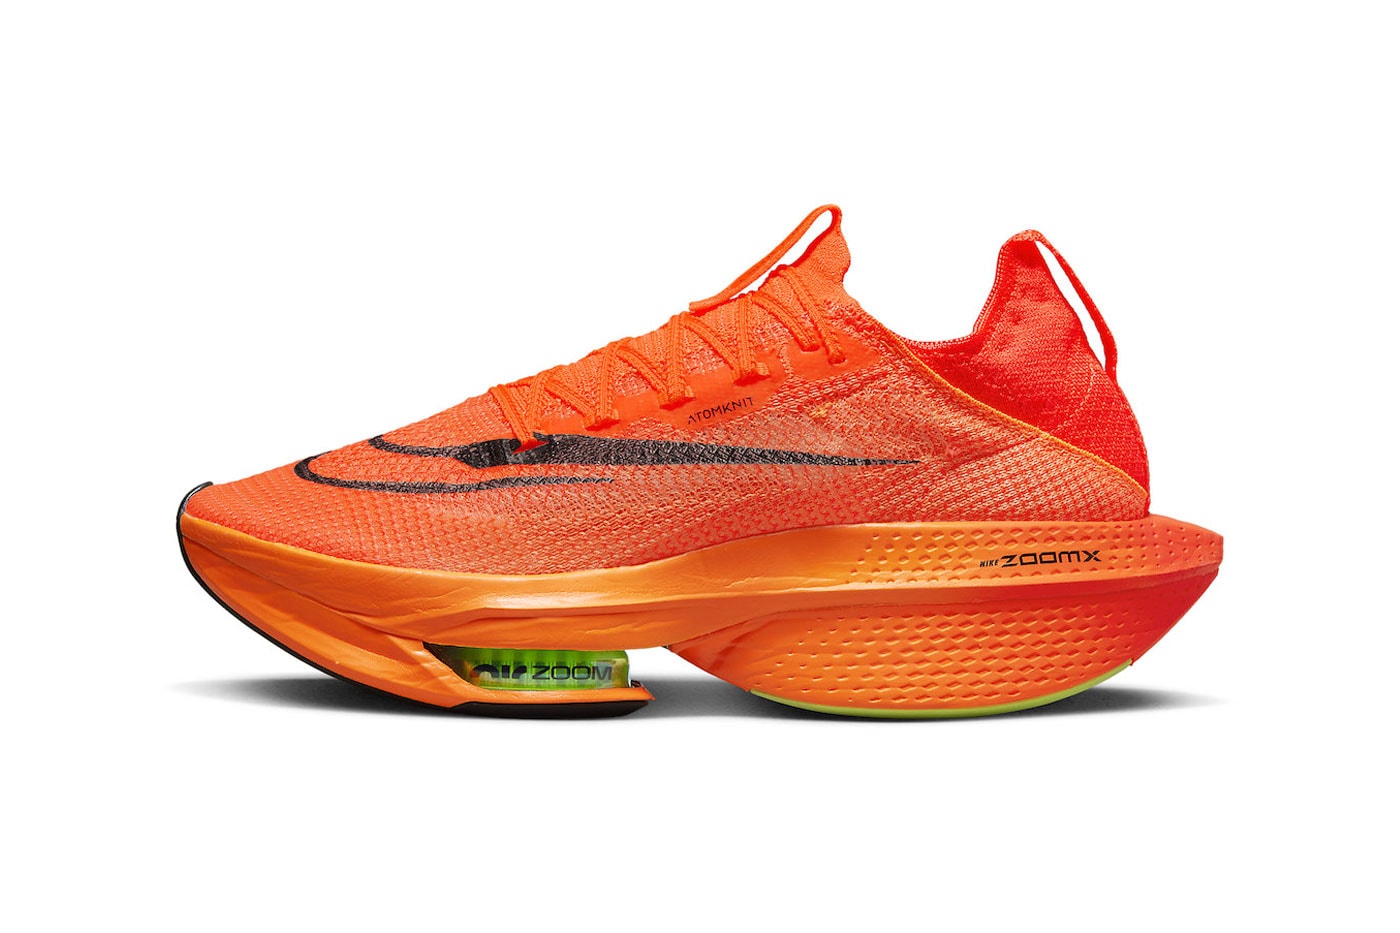 Nike Air Zoom Alphafly NEXT percent 2 bright total orange record marathon atomknit zoomx carbon fiber plate release info date price 275 usd